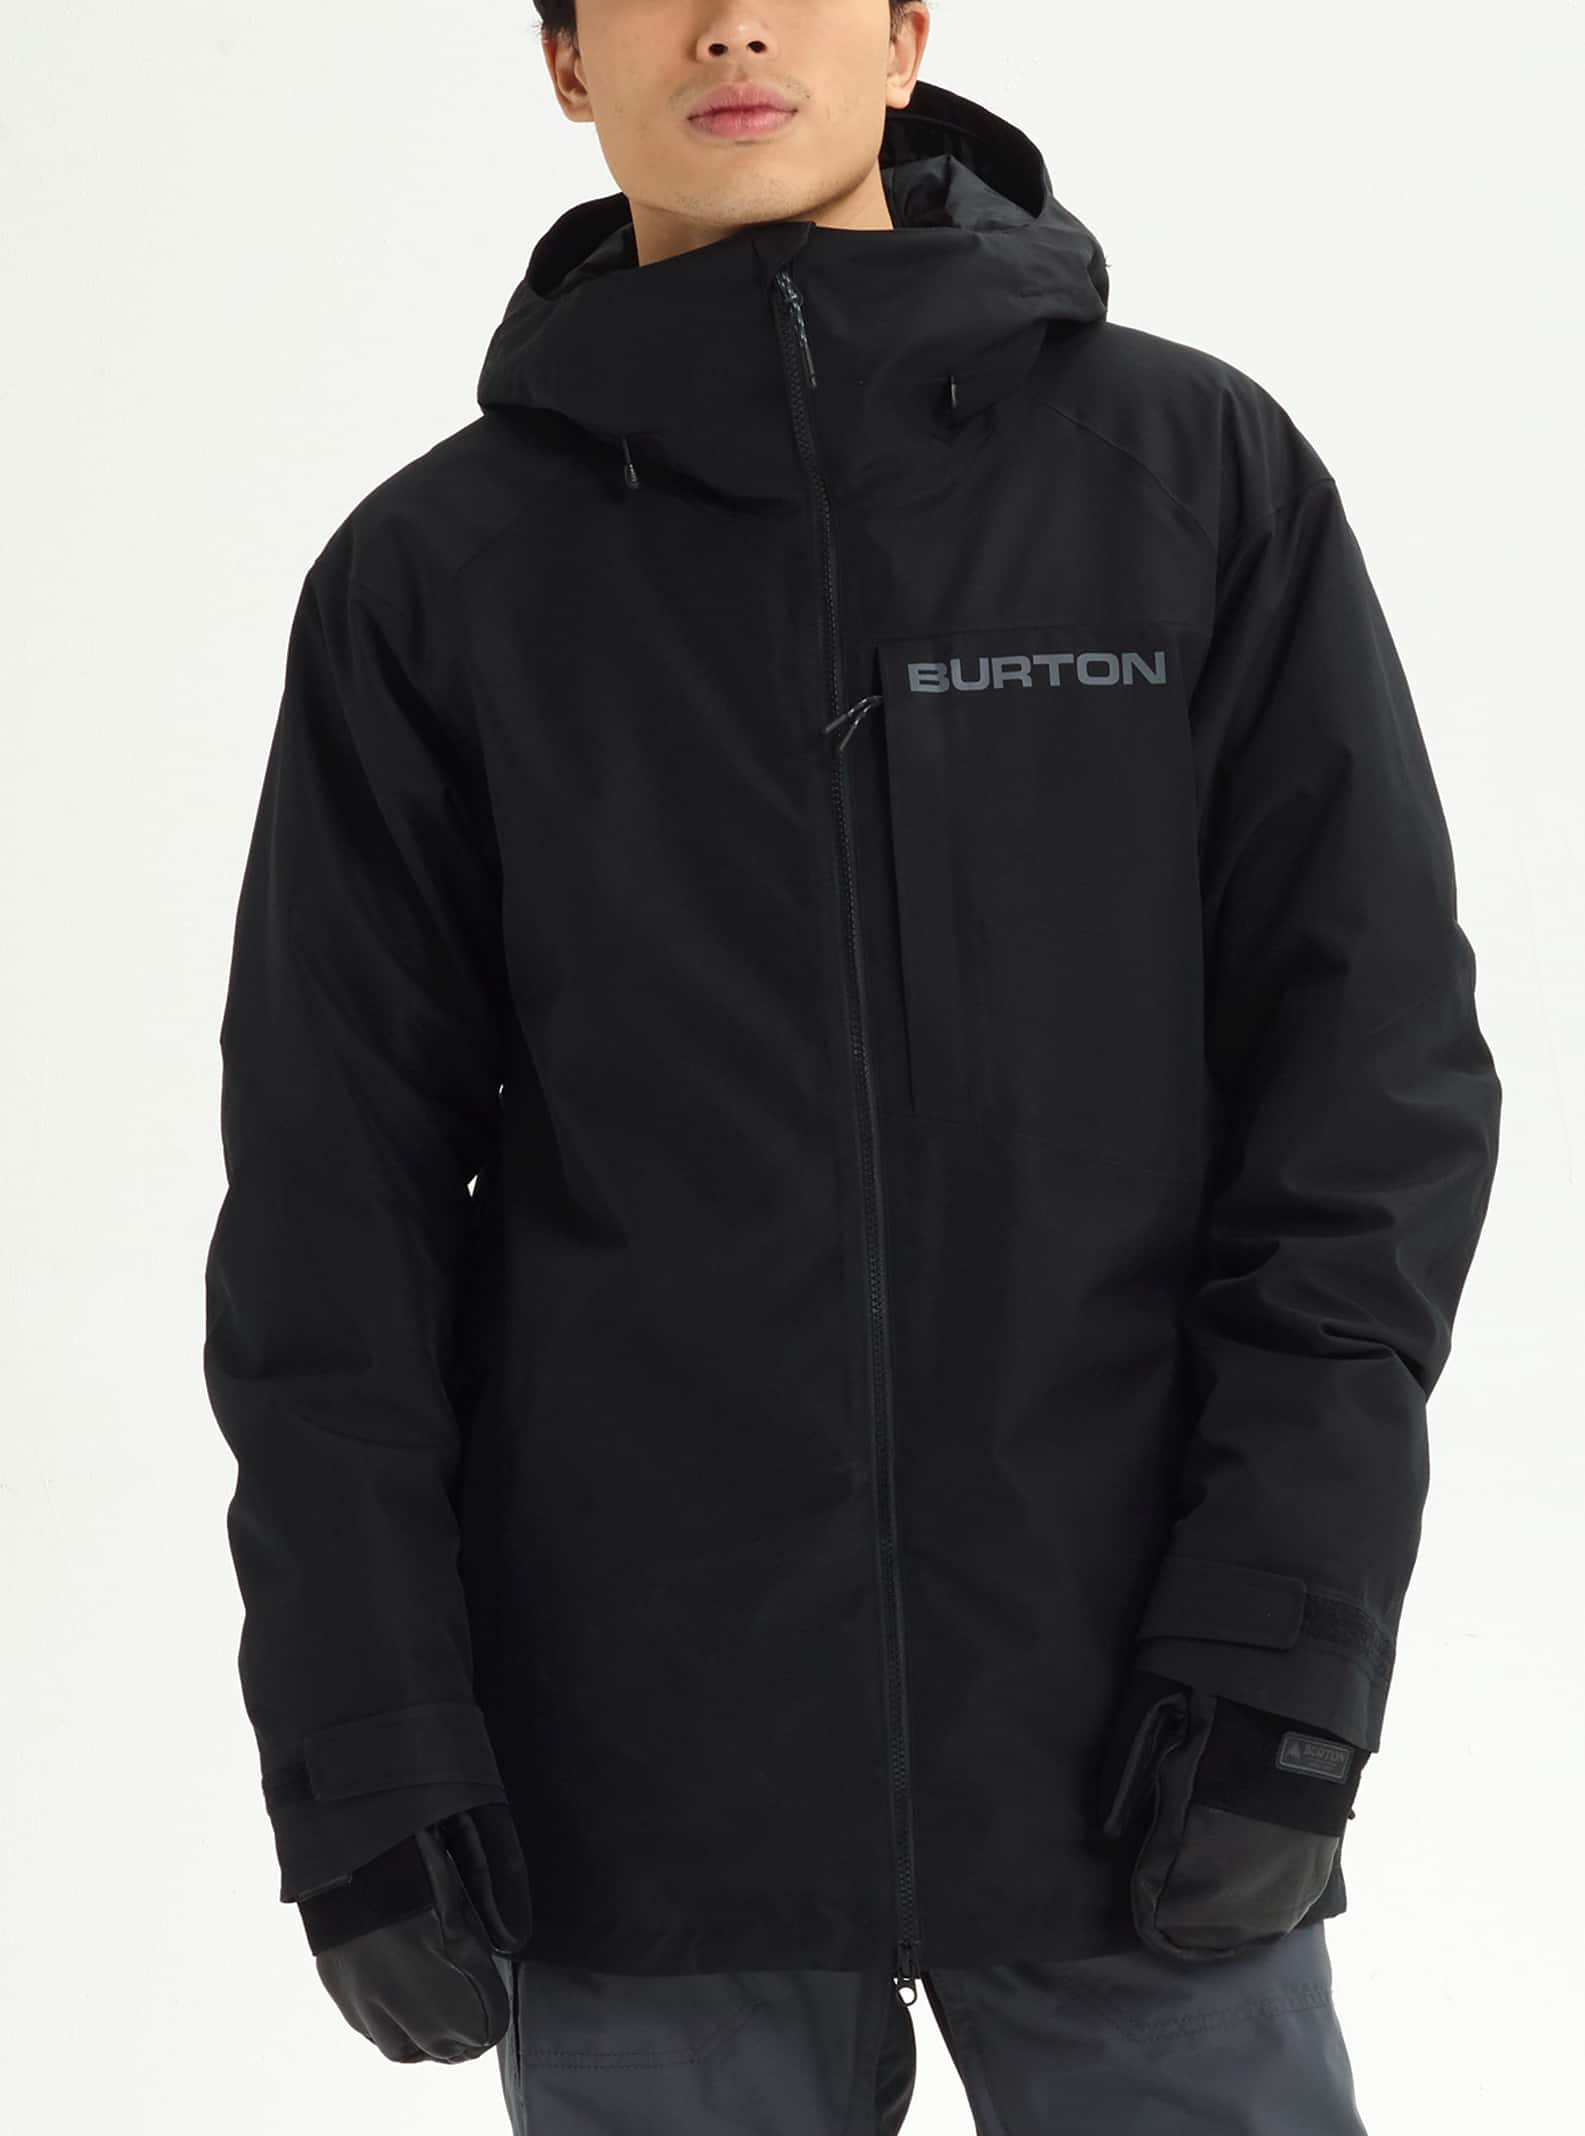 Men's Burton Snowboard Jacket Hot Sale, 58% OFF | www.colegiogamarra.com